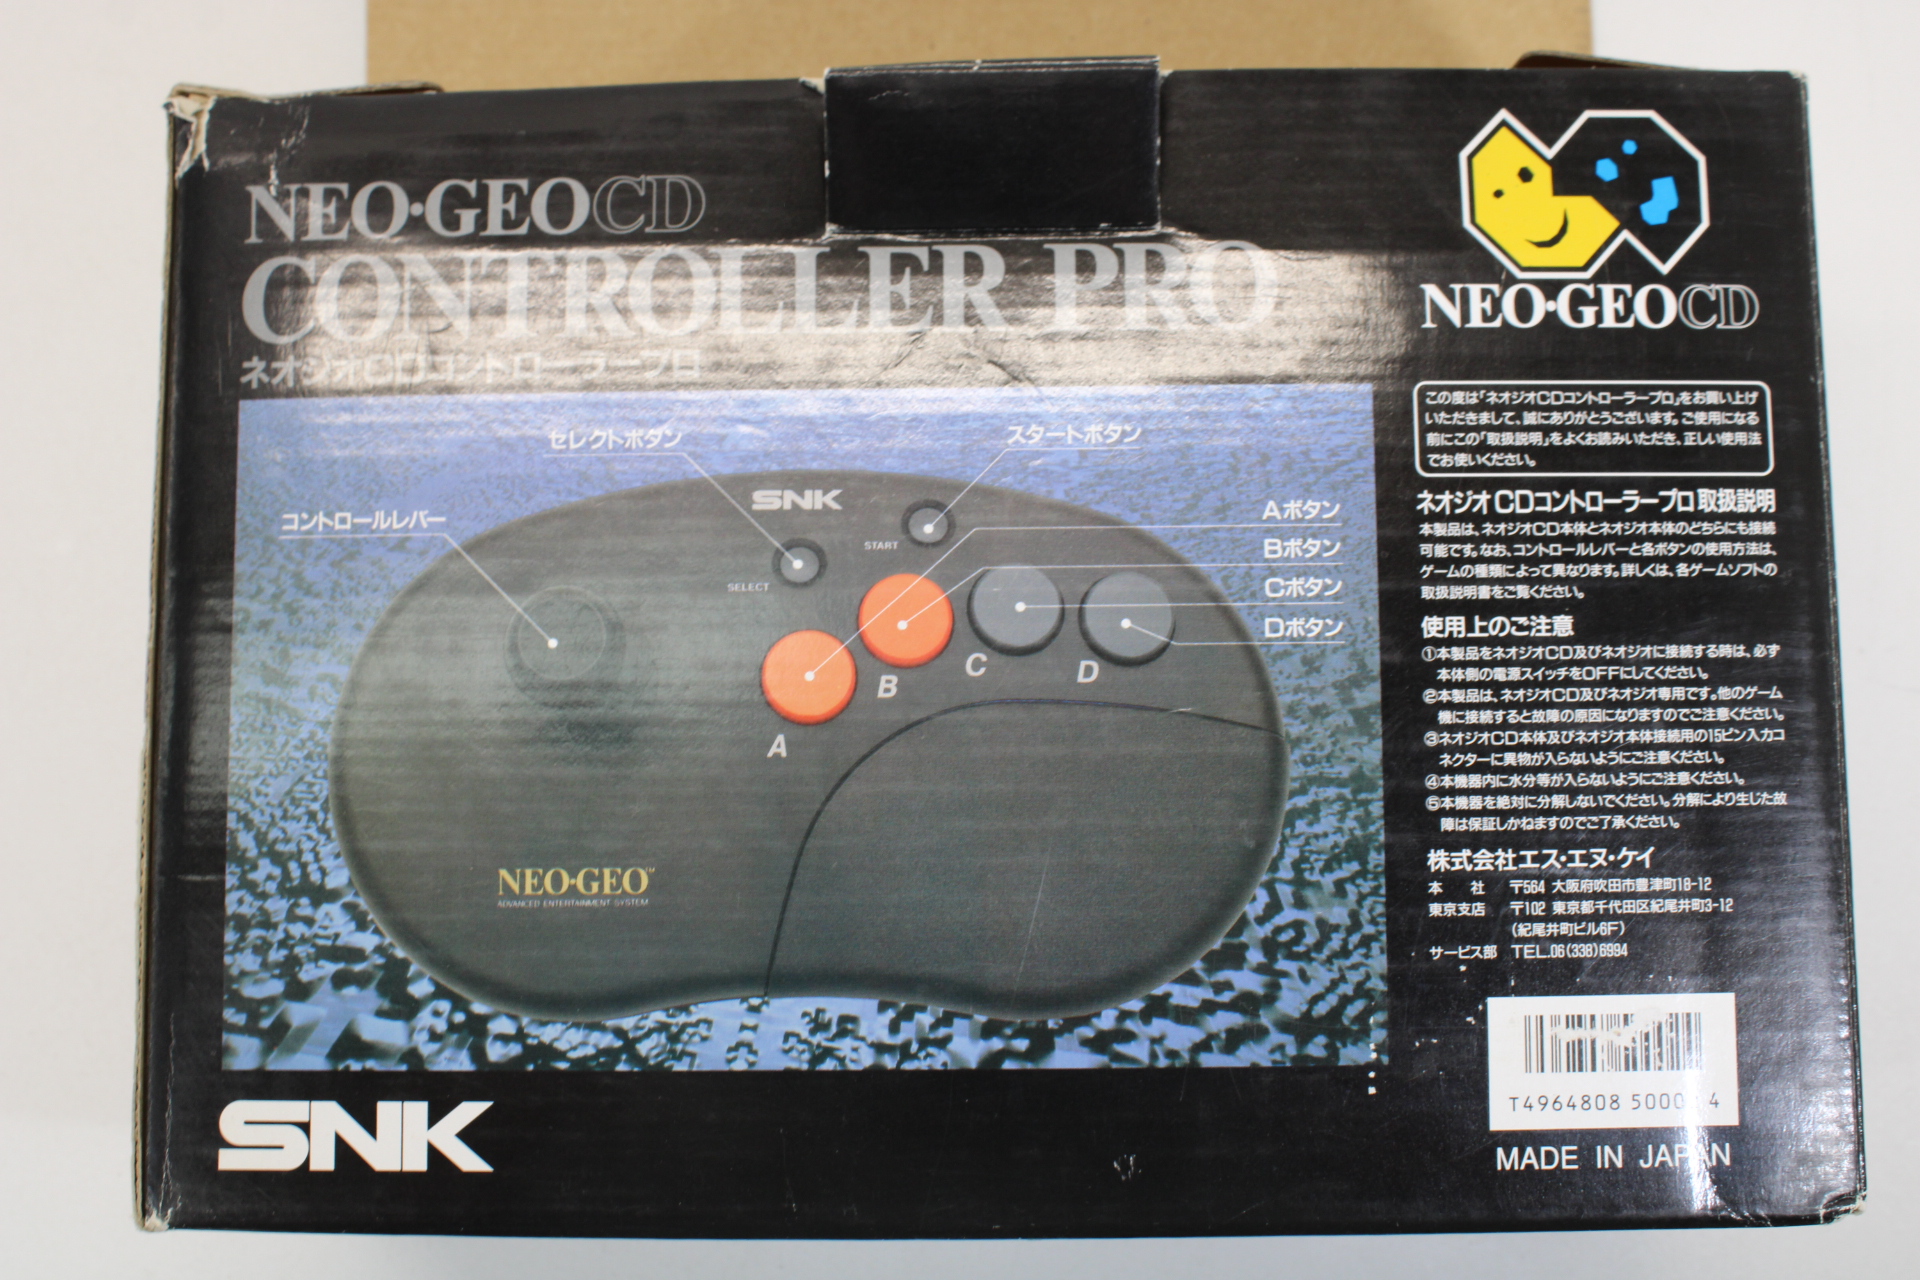 Neo Geo Joystick Controller PRO / Arcade Stick Boxed (B) – Retro